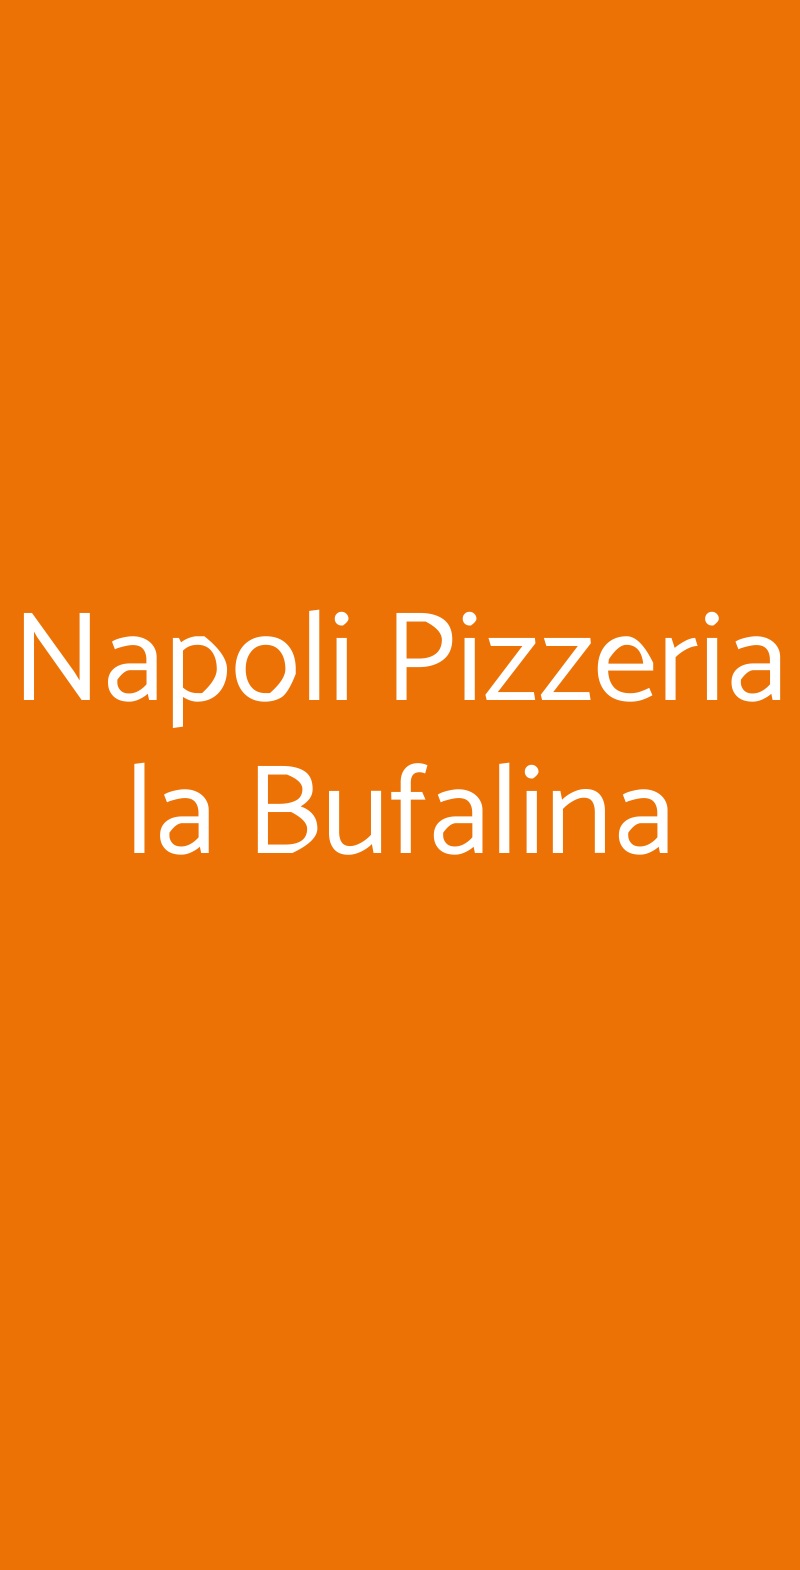 Napoli Pizzeria la Bufalina Napoli menù 1 pagina